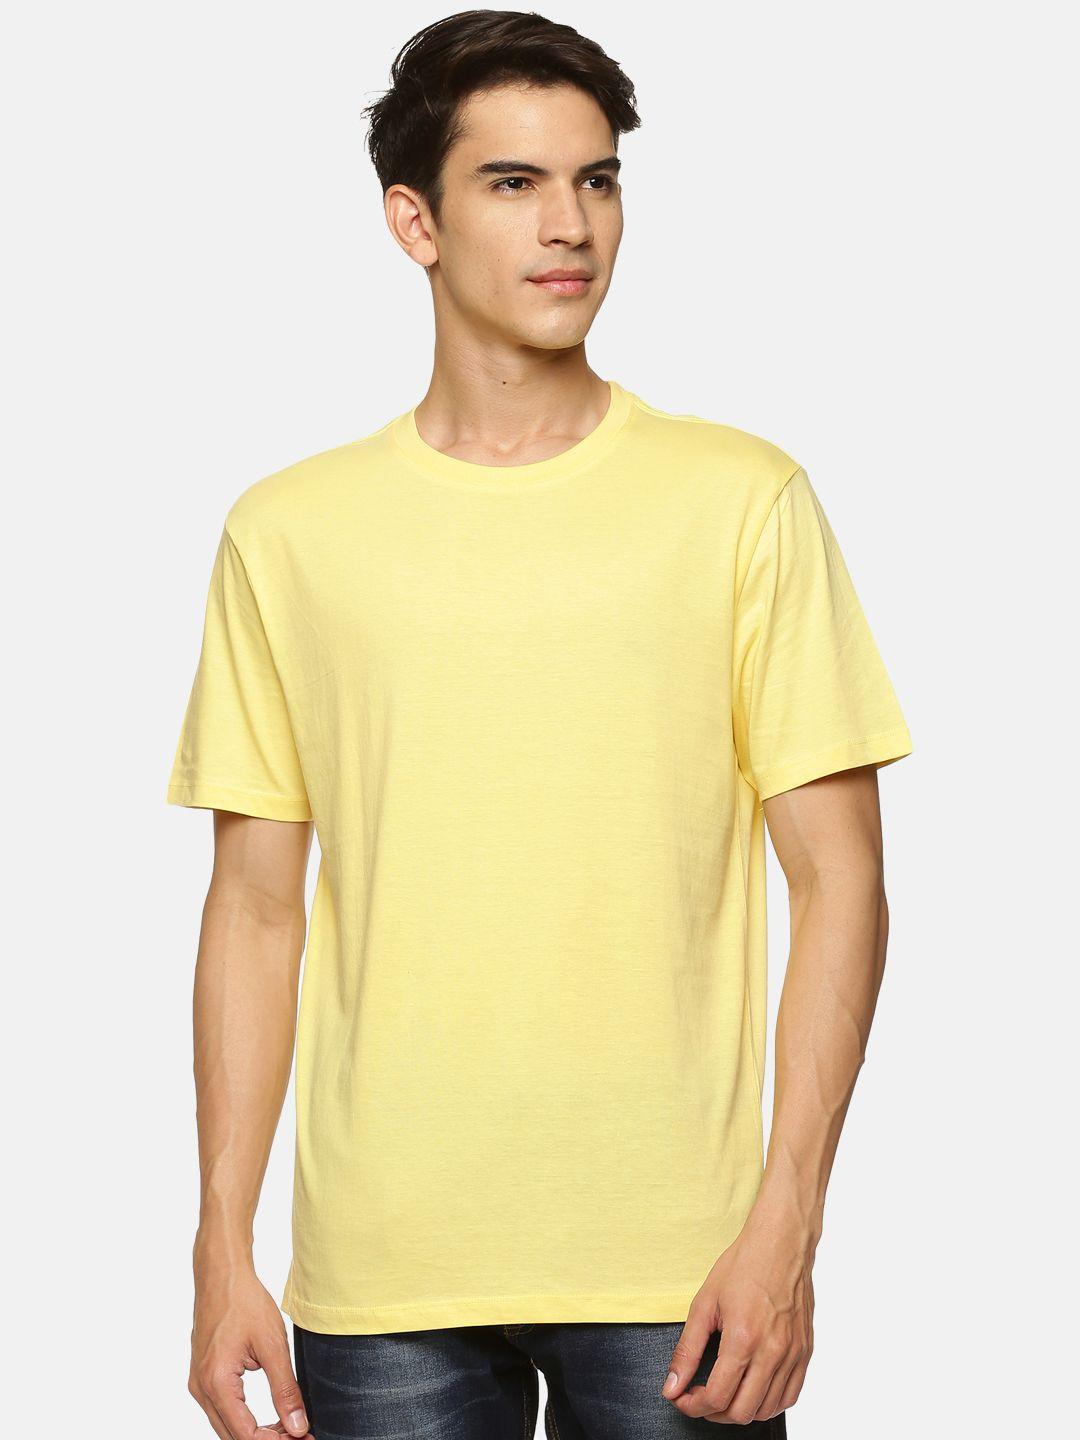 bollti round neck short sleeves pure cotton t-shirt